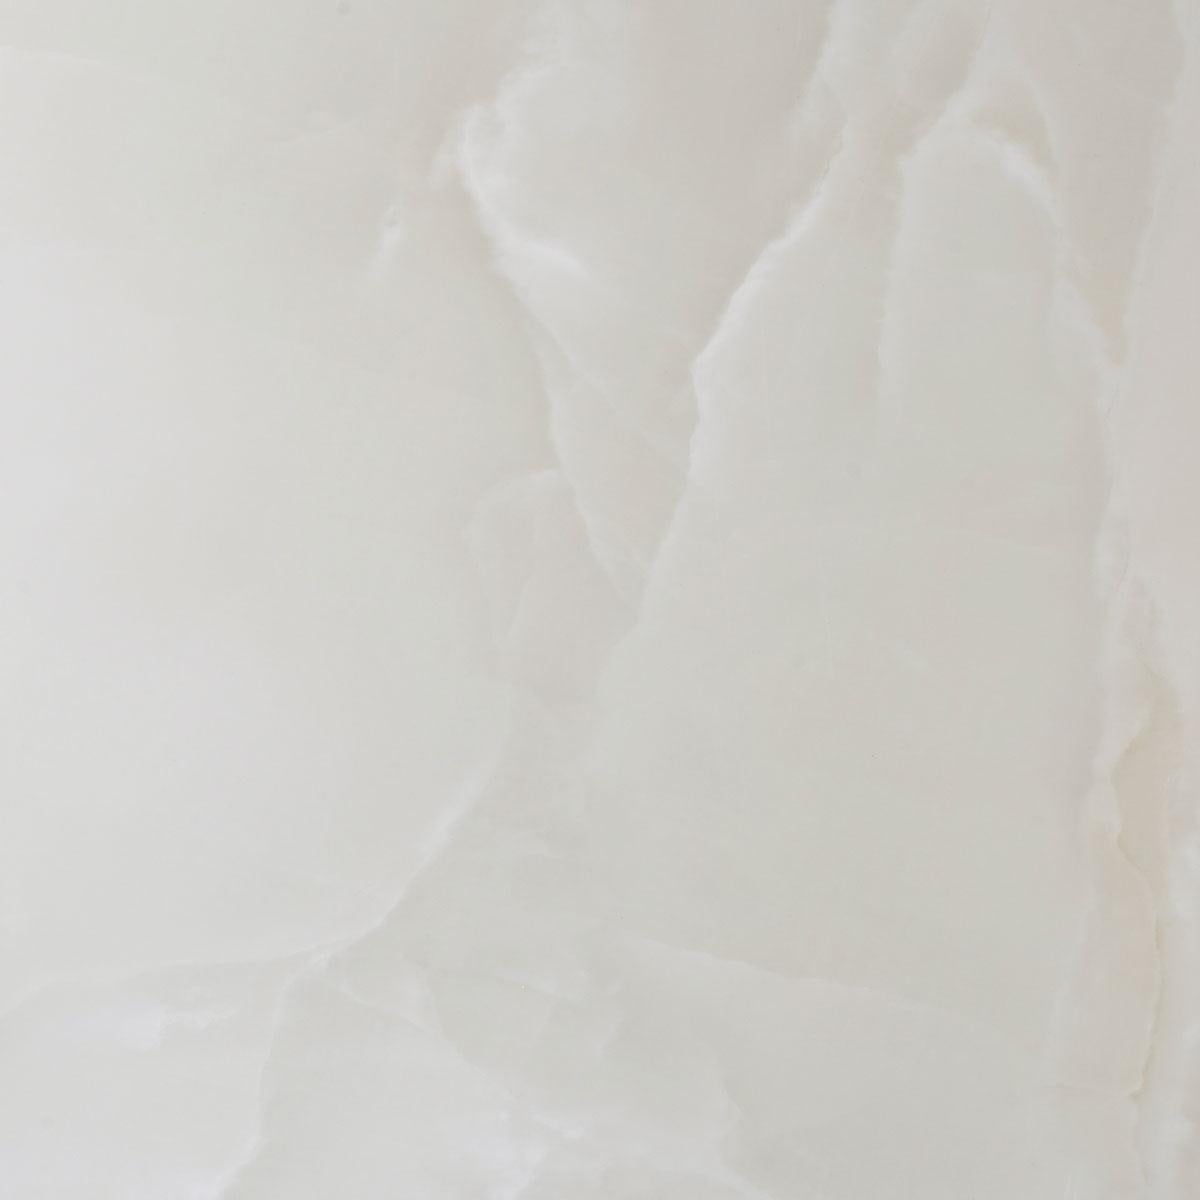 Emporio White Onyx Large-Format Porcelain Tile 24x48